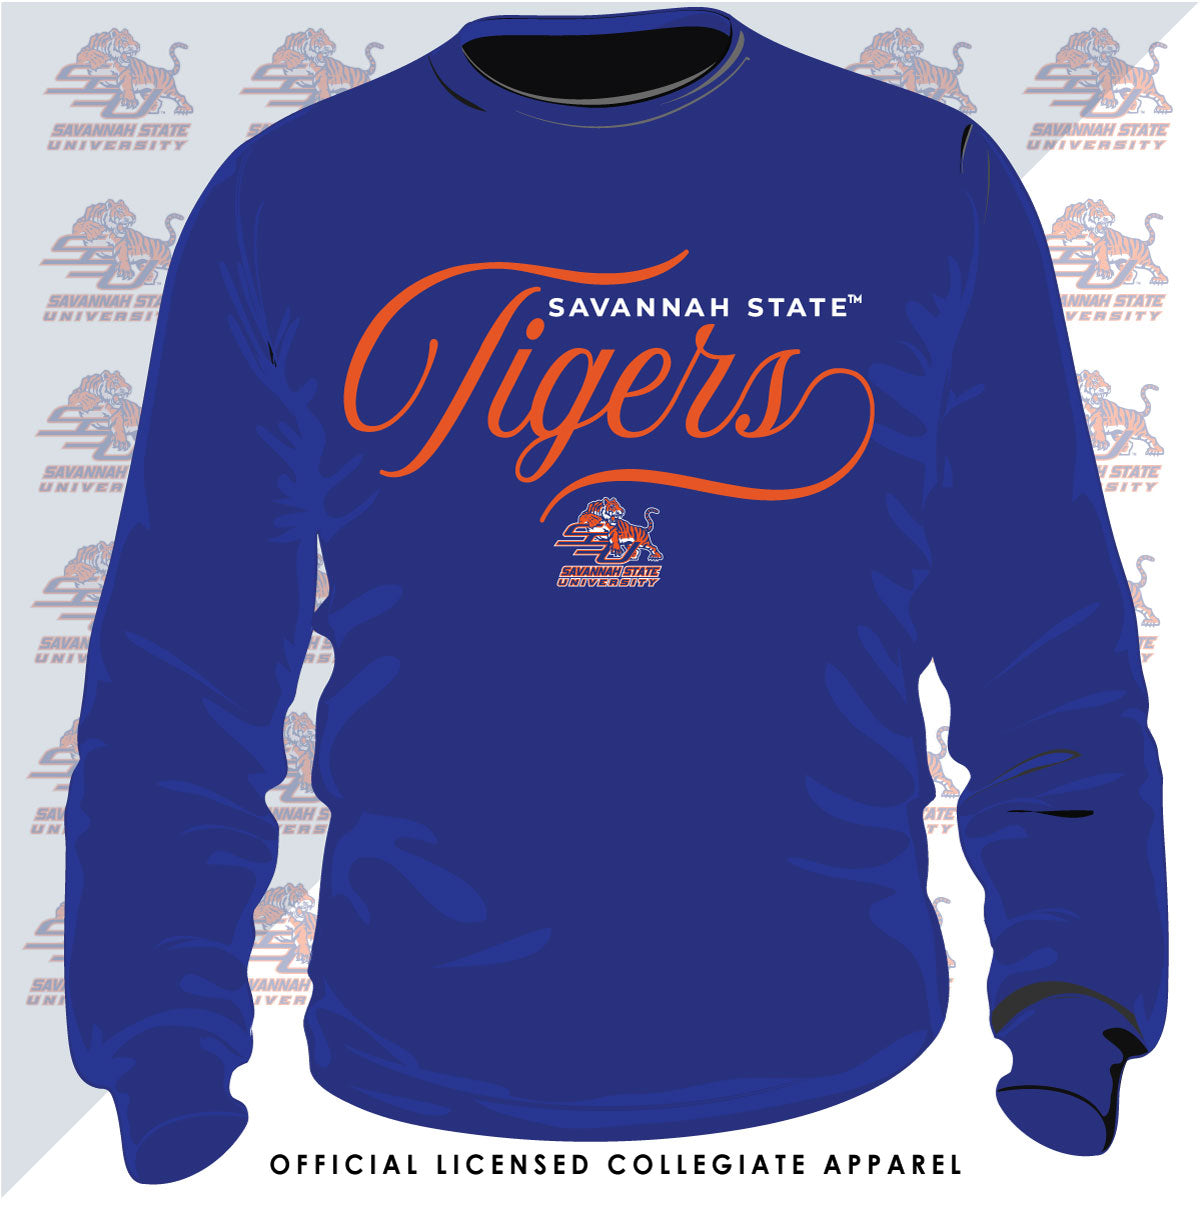 Savannah State | Tigers Royal Blue Unisex Sweatshirt